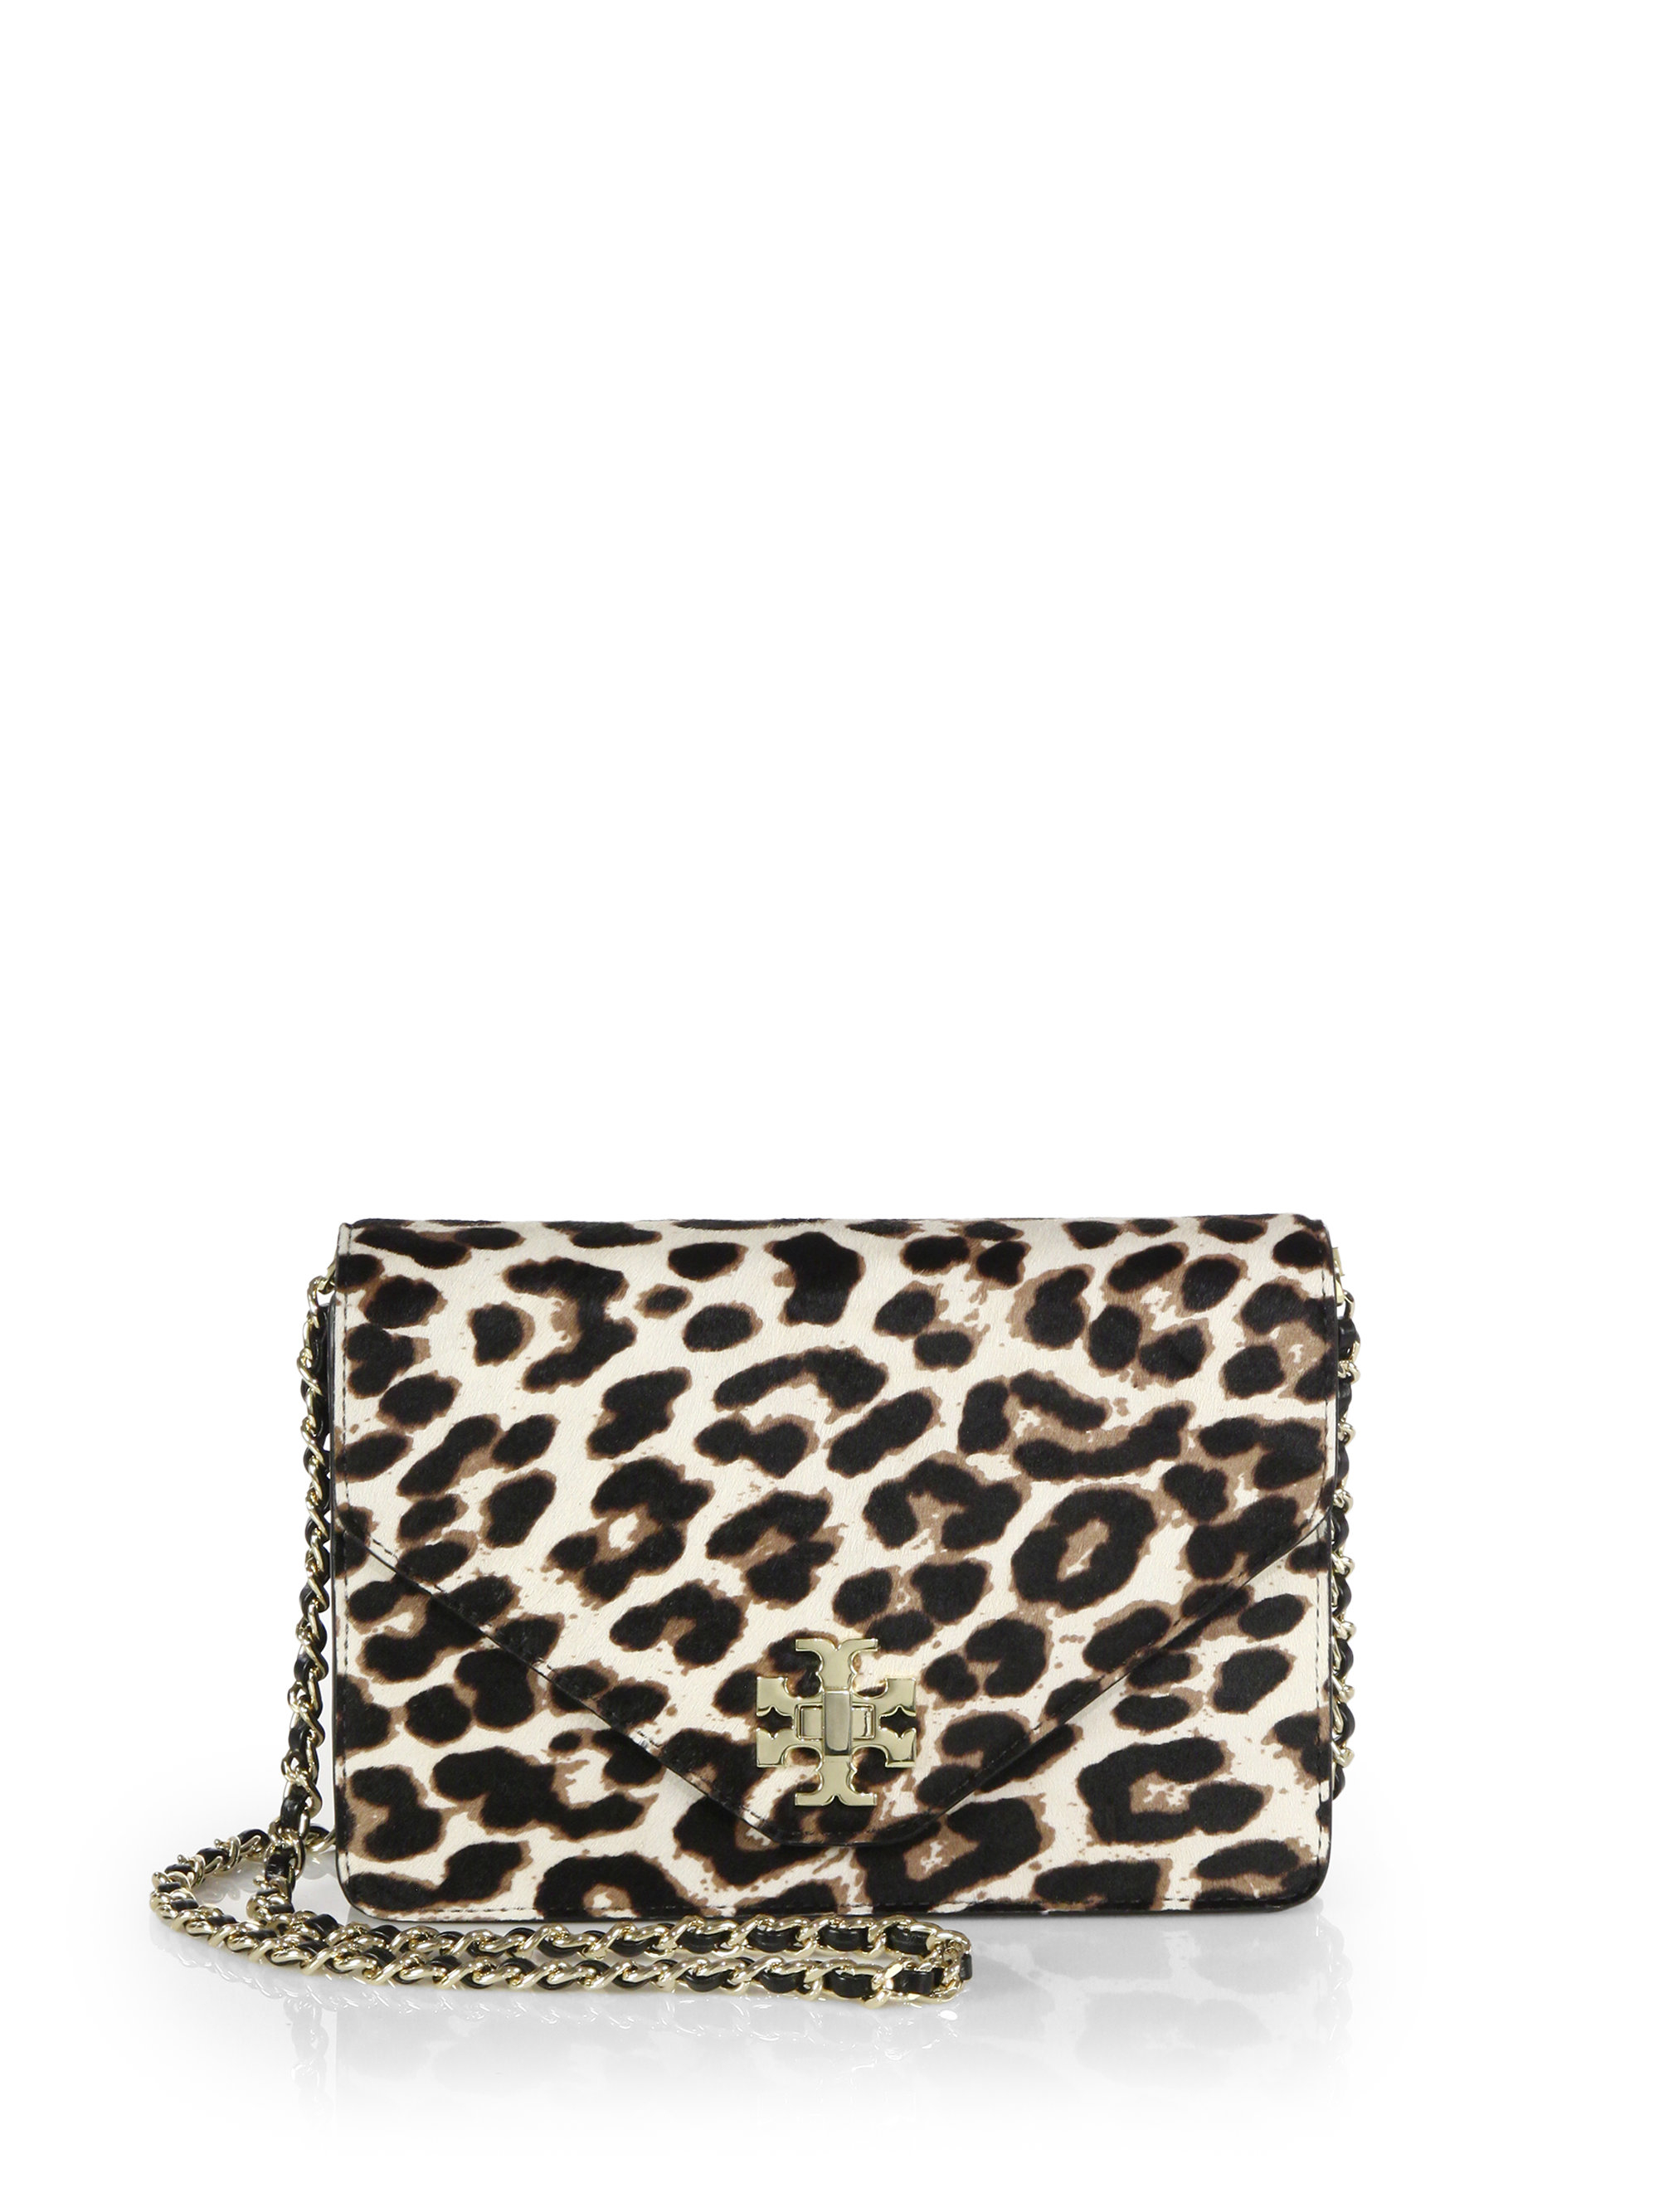 Tory Burch Kira Leopard-Print Calf Hair Envelope Crossbody Bag in ...